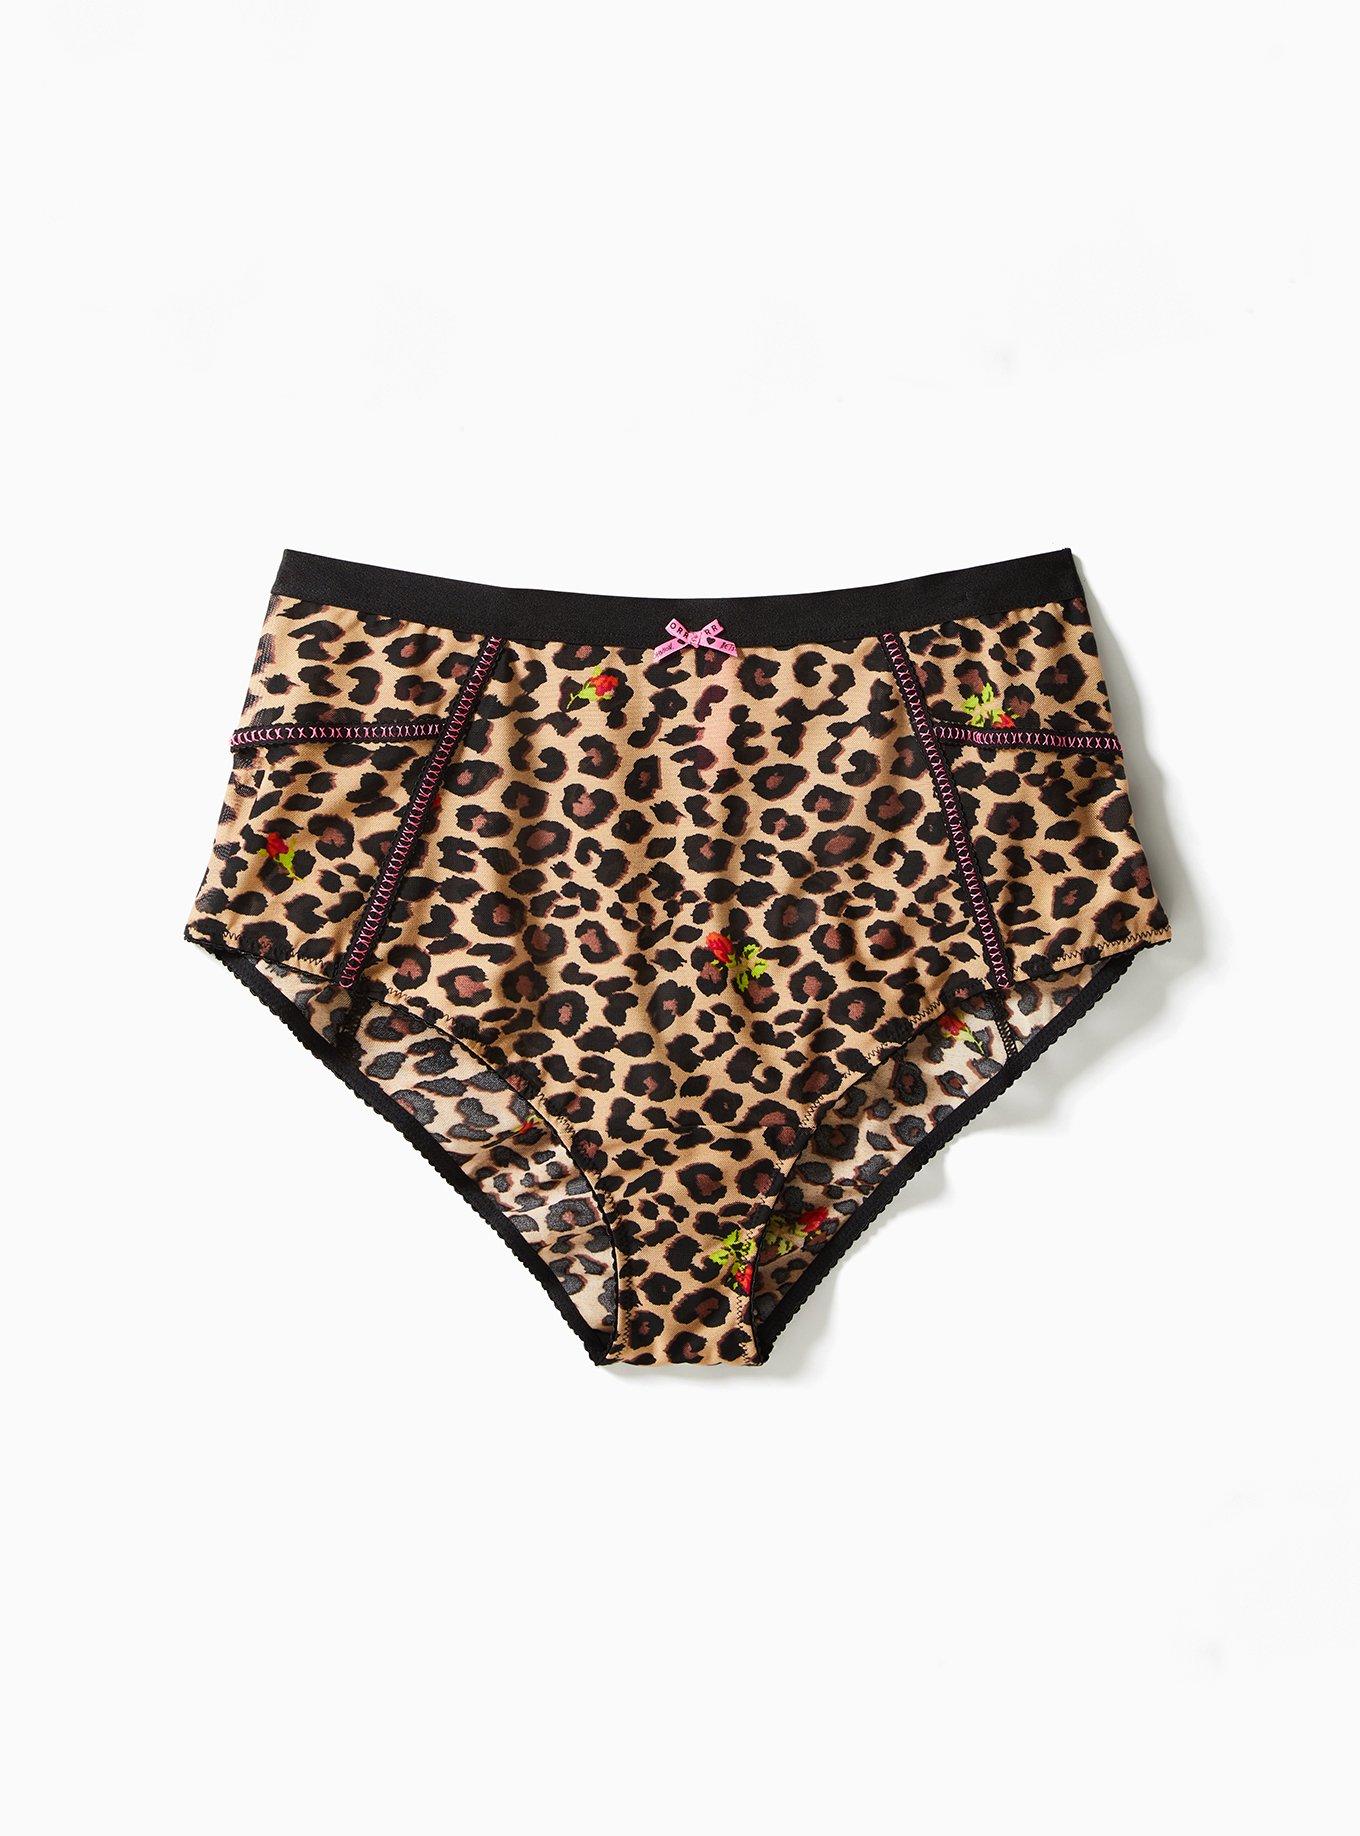 Plus Size - Betsey Johnson Leopard Floral High Waist Panty - Torrid